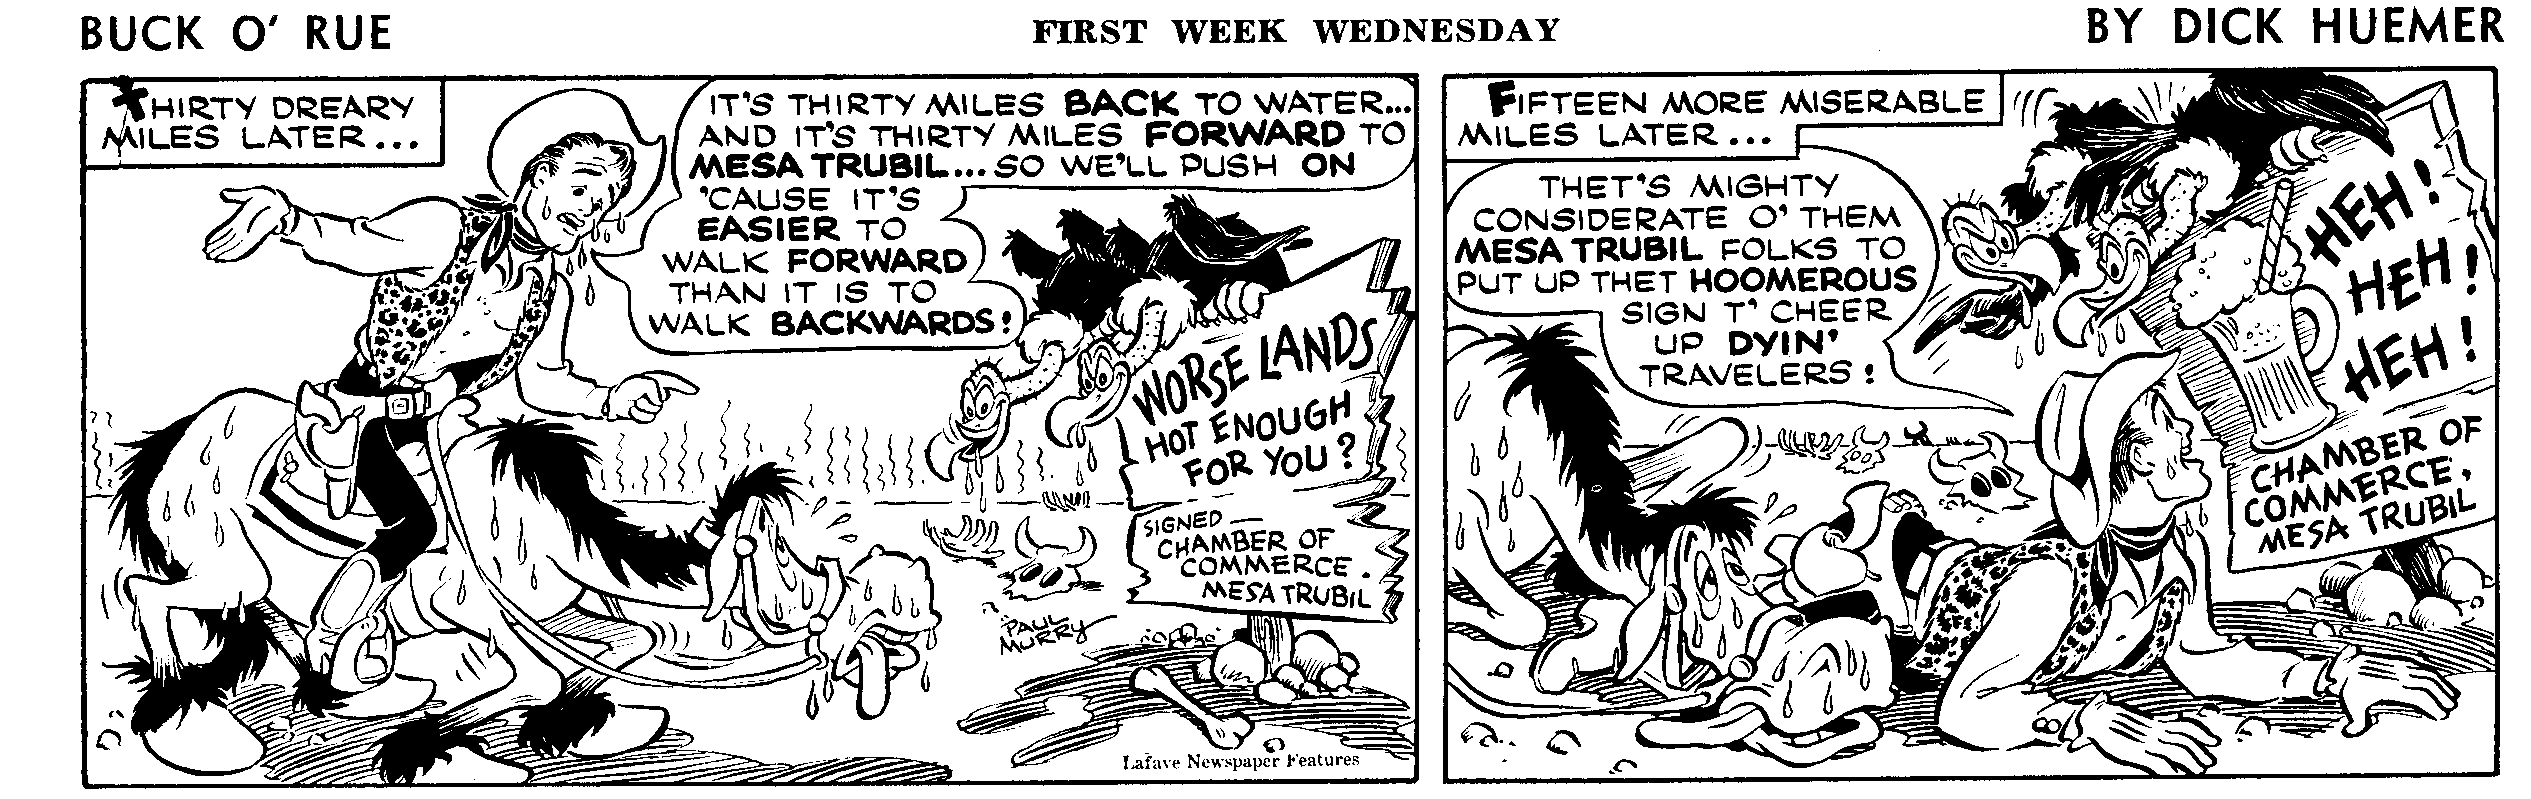 Wednesday strip